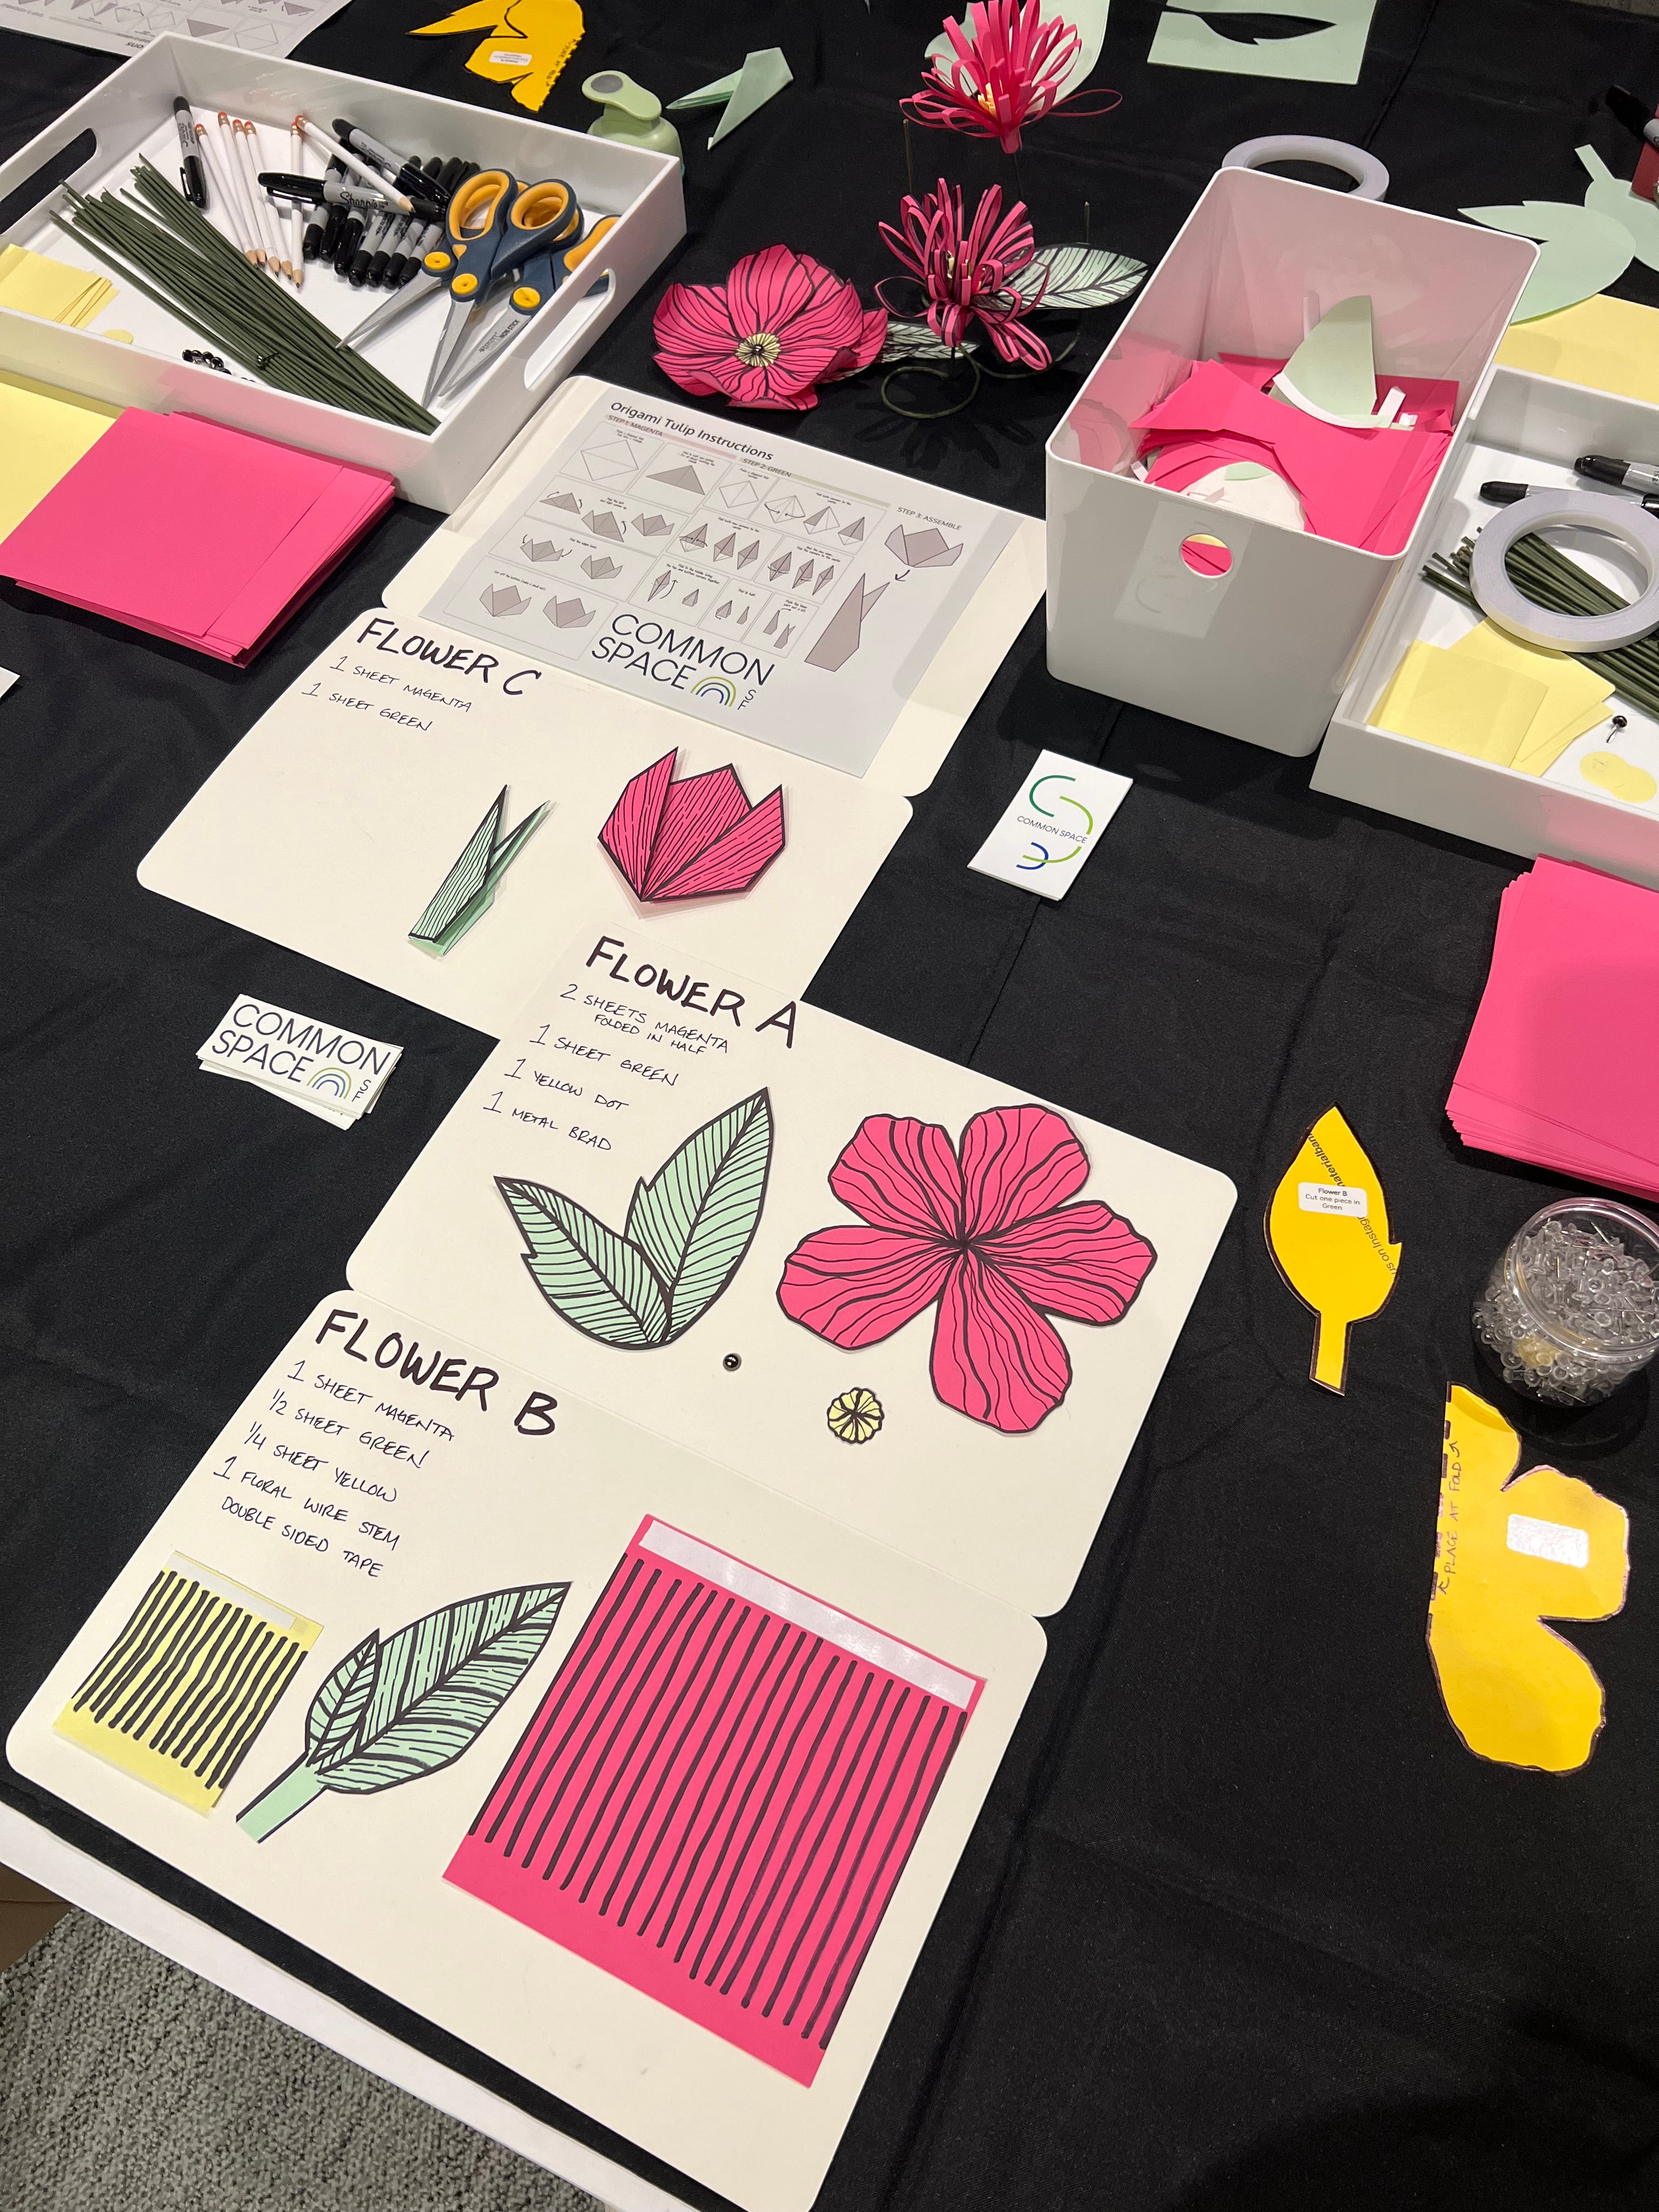 Corporate Workshops - Paper Flower Making + More